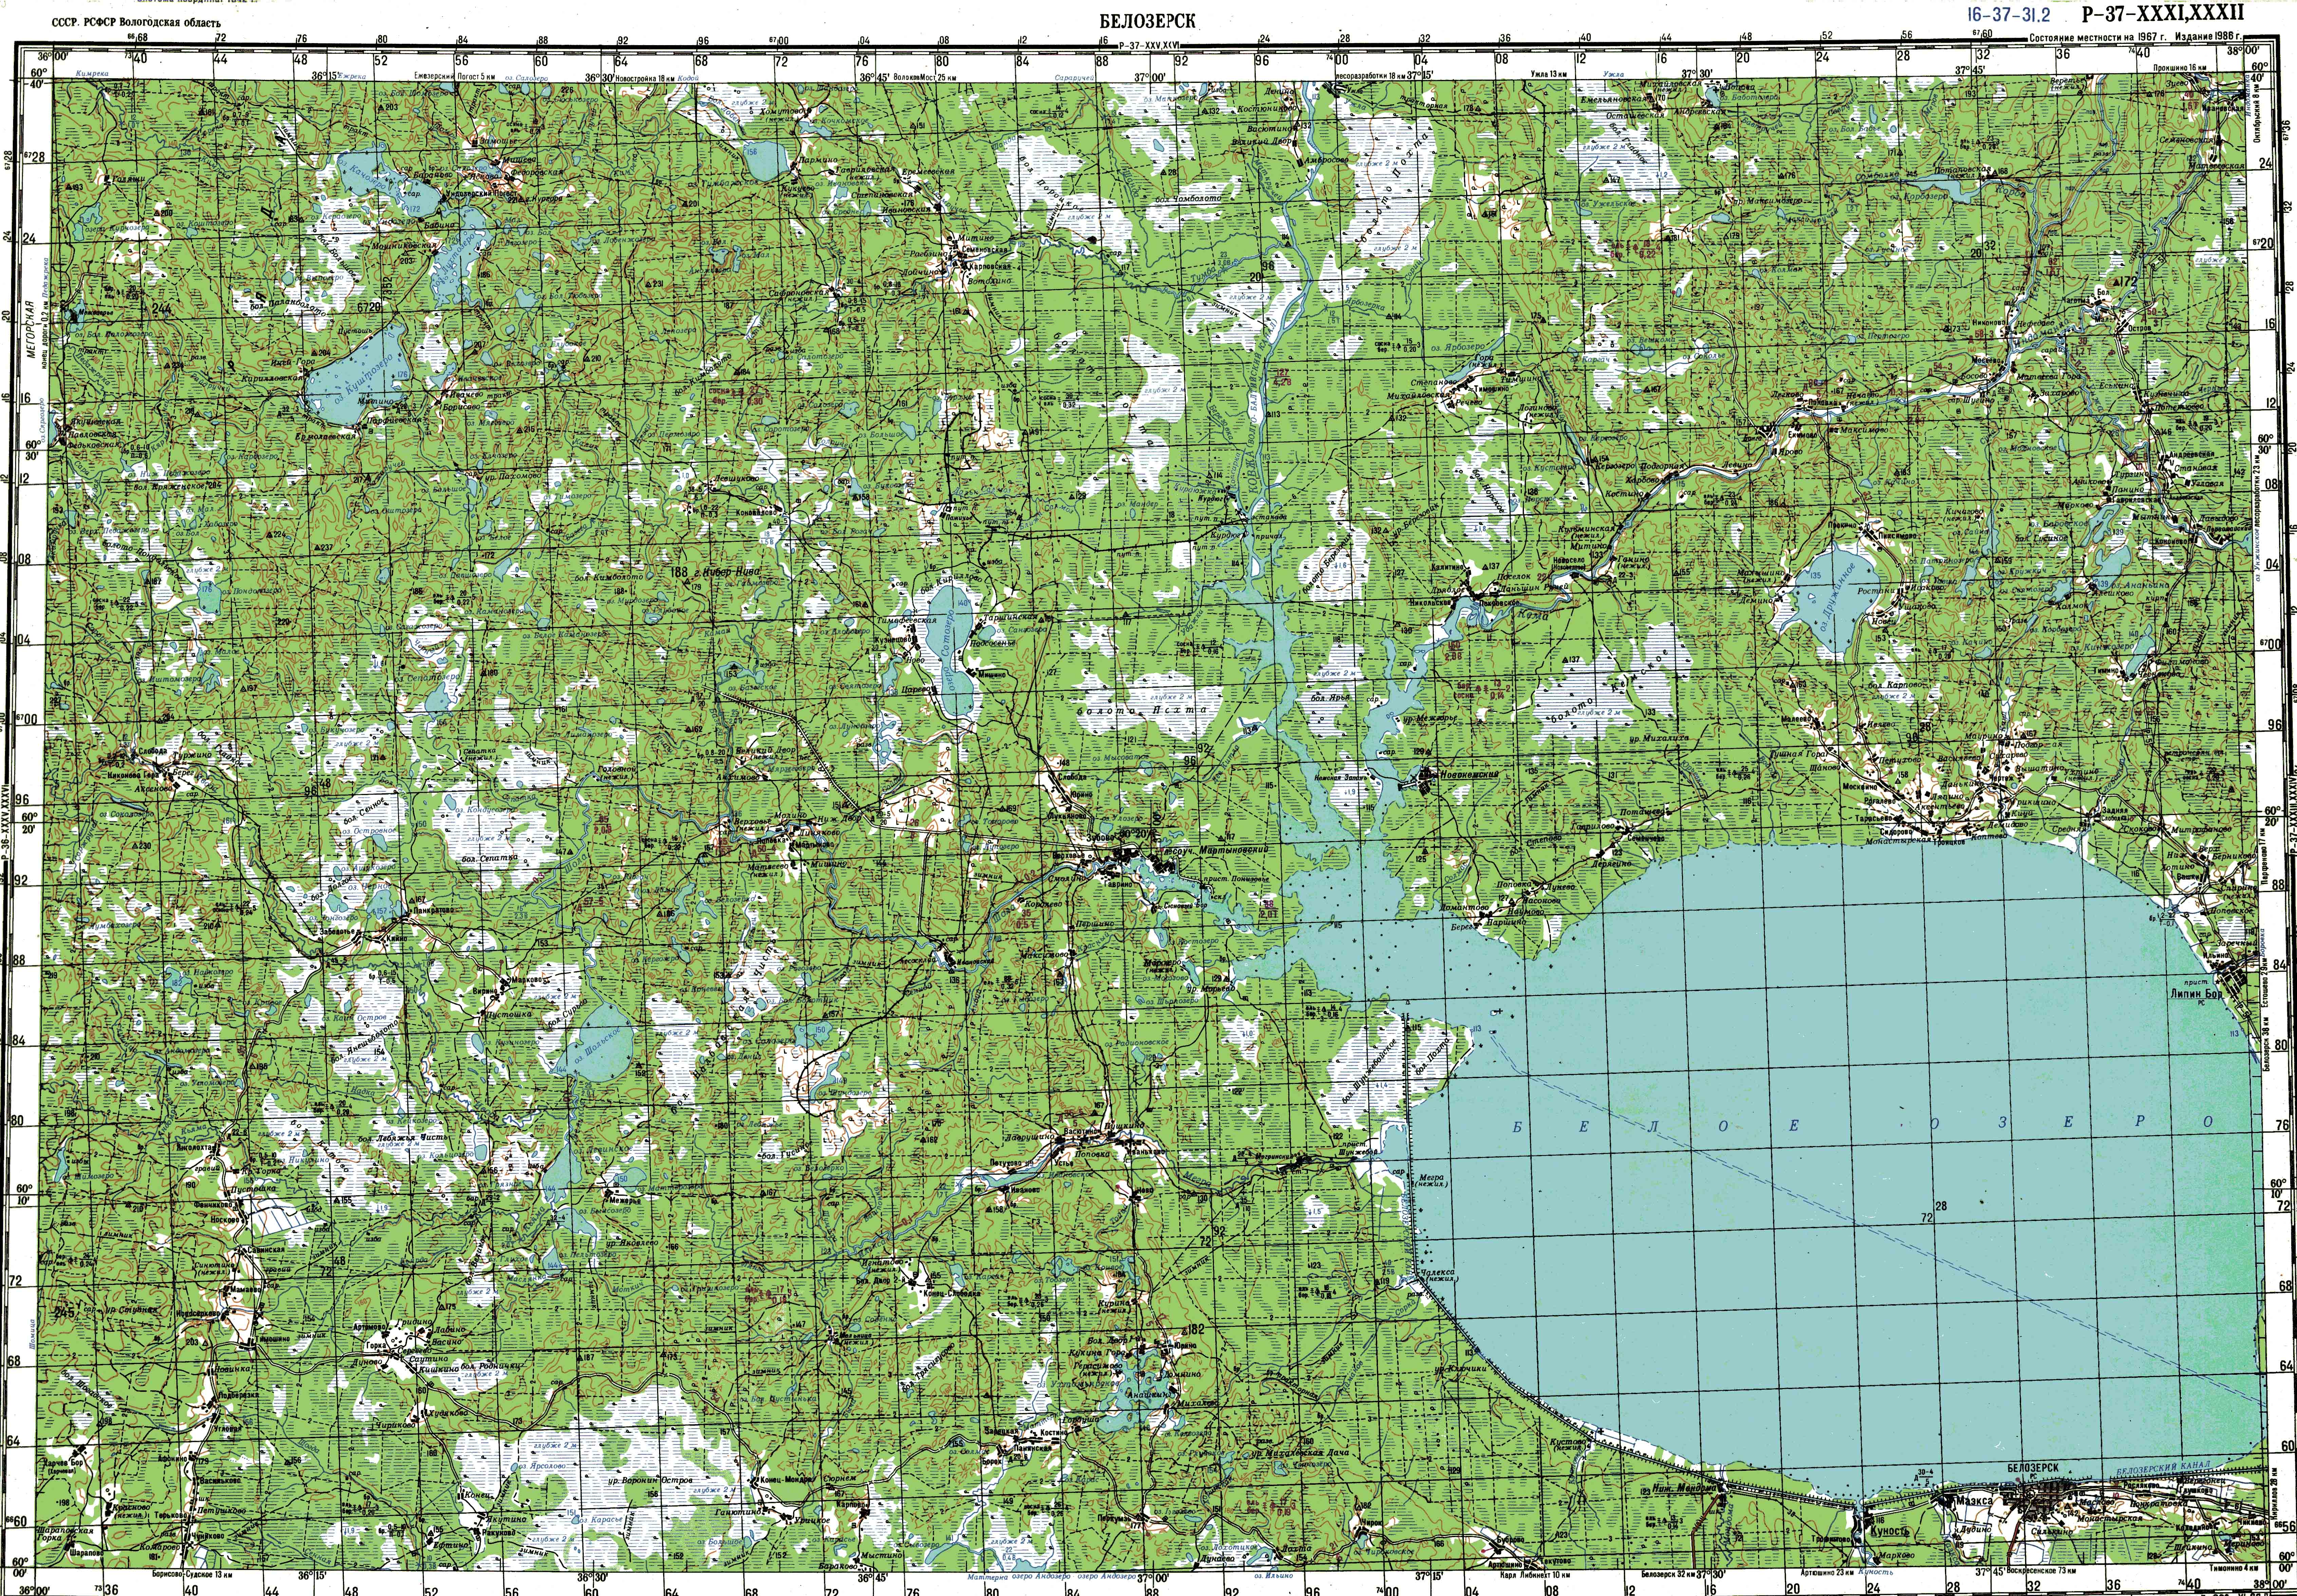 Топографические карты Генштаба / Карты листа P-37 (Онега) / Карты масштаба 1:200000 (двухкилометровки) / P-37-31,32, Белозерск